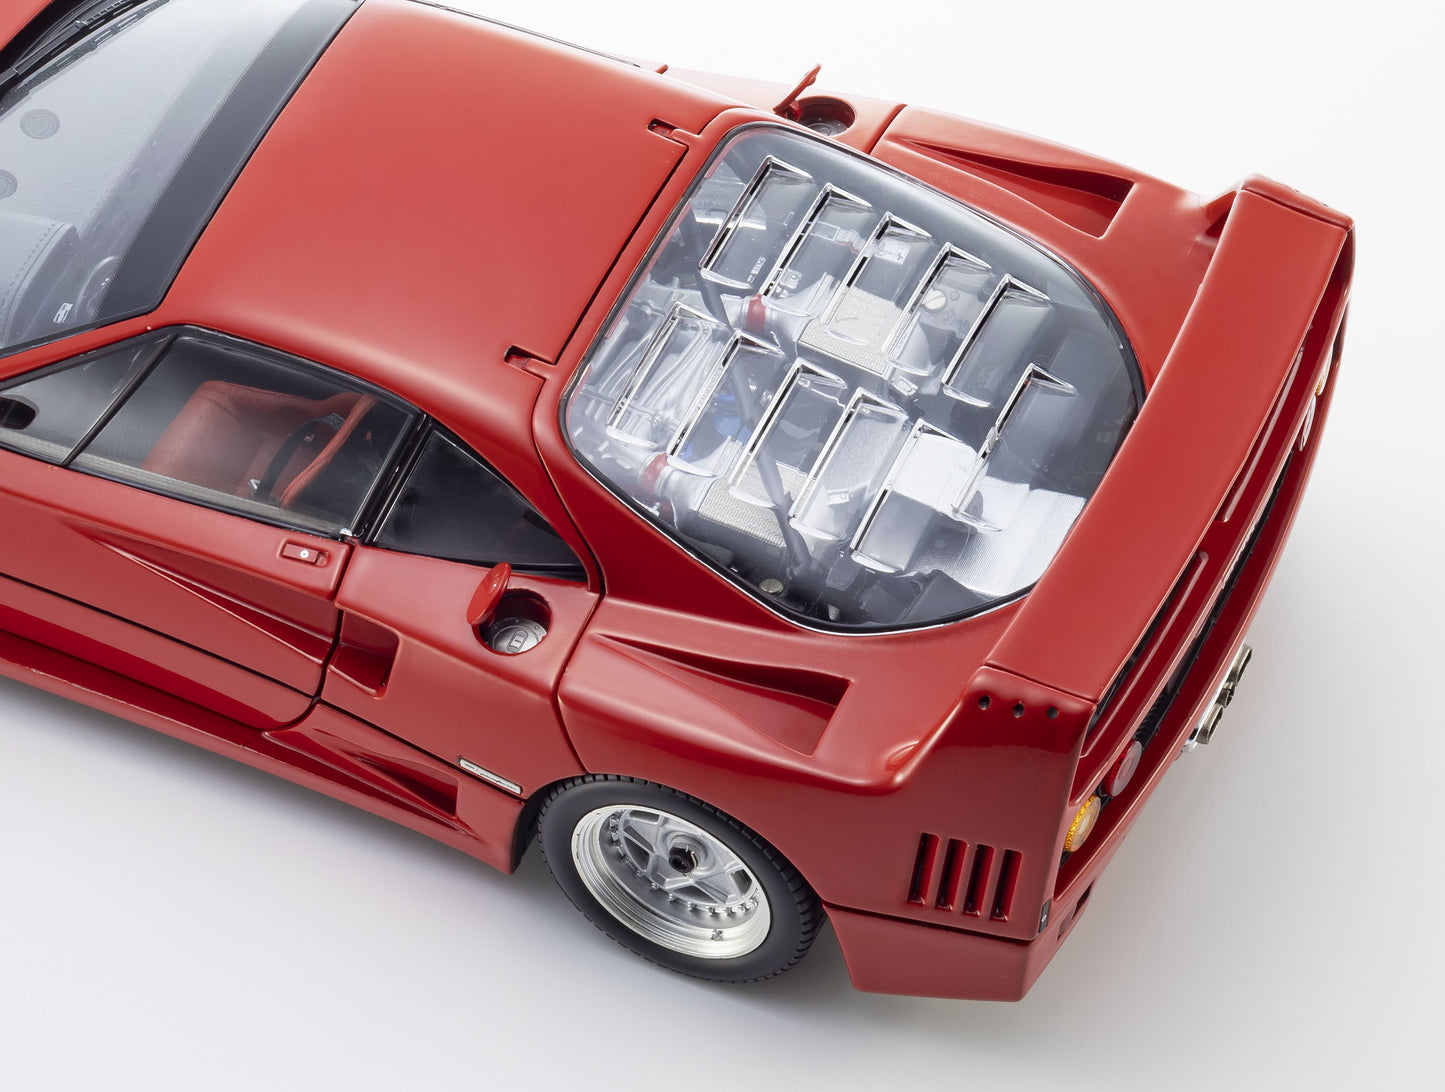 Kyosho - Ferrari F40 Street (Rosso Corsa Red) 1:18 Scale Model Car